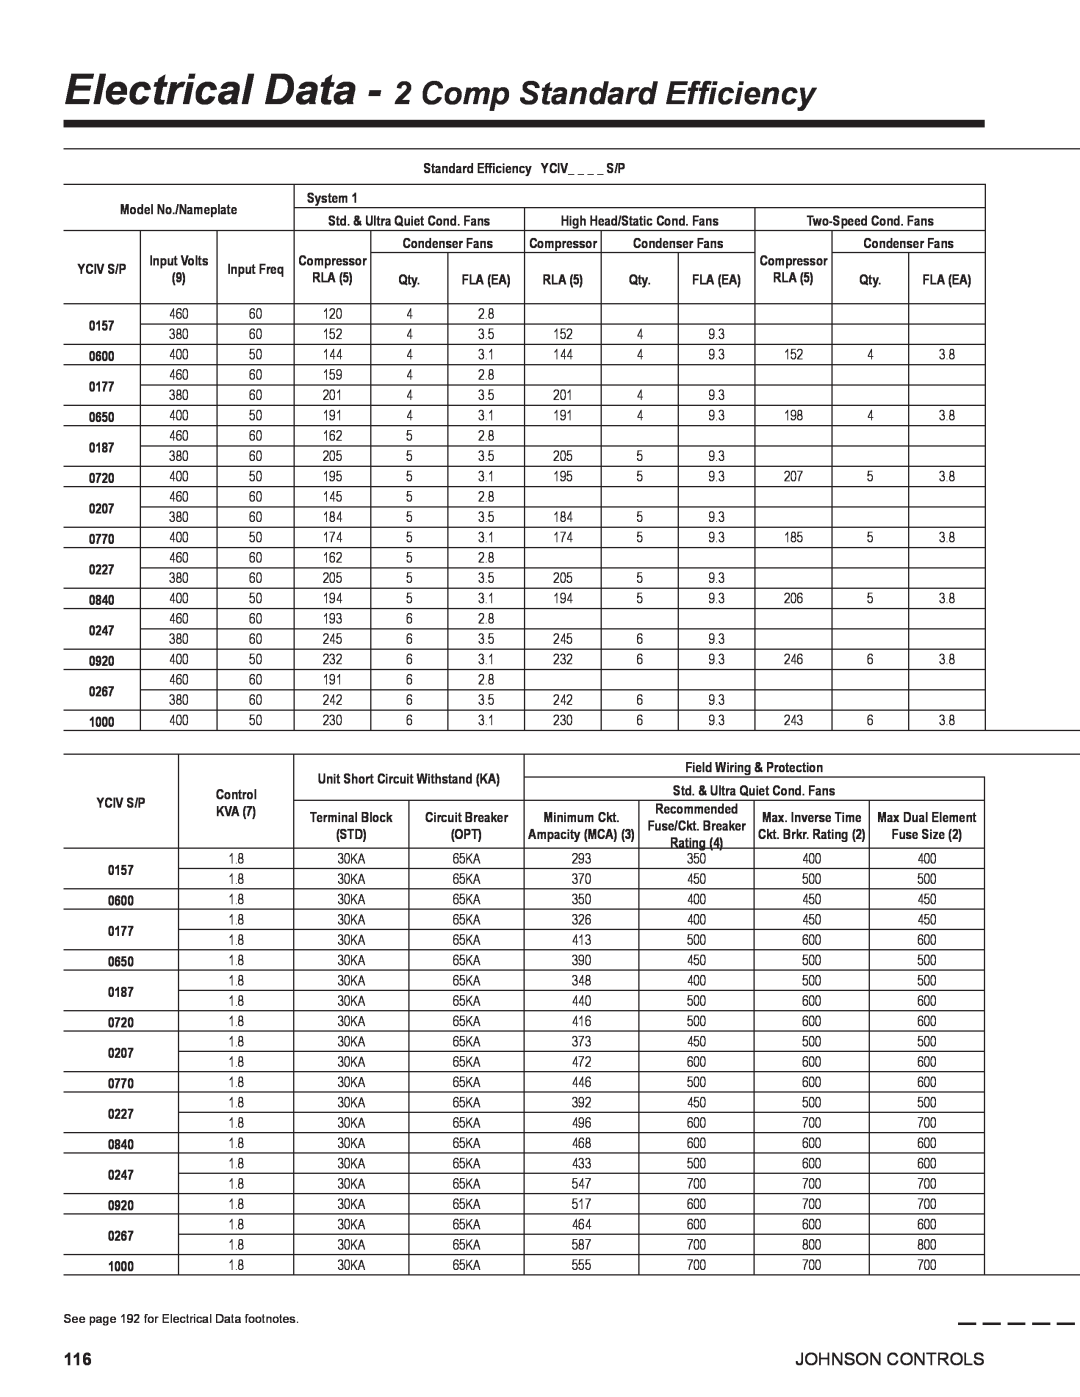 York R134A manual Electrical Data - 2 Comp Standard Efficiency, Johnson Controls 